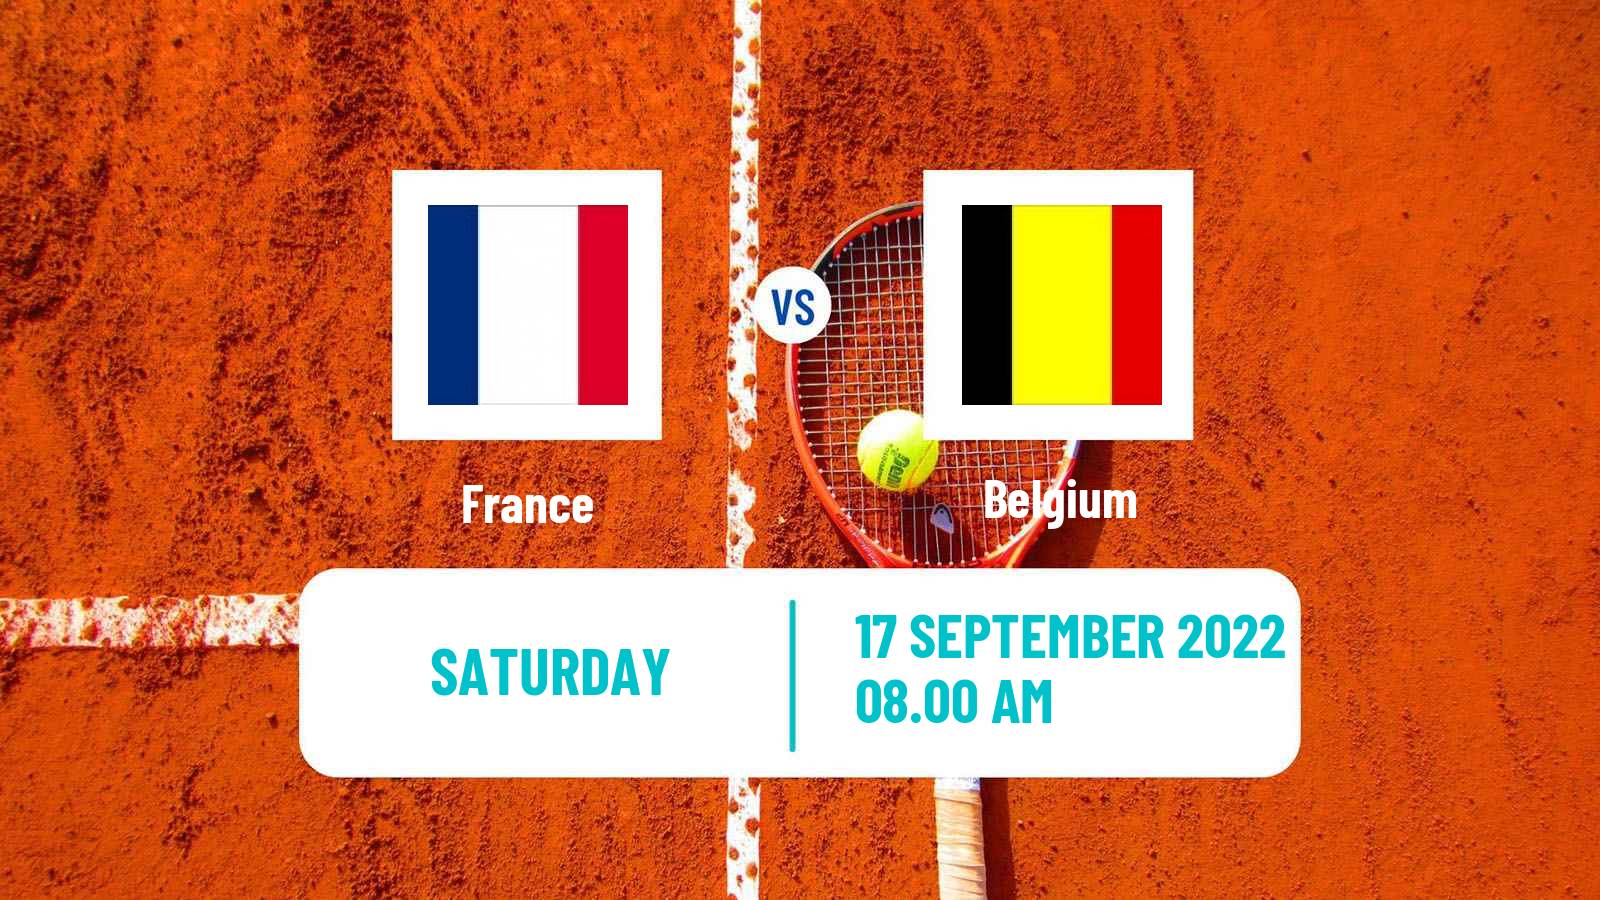 Tennis Davis Cup - World Group Teams France - Belgium